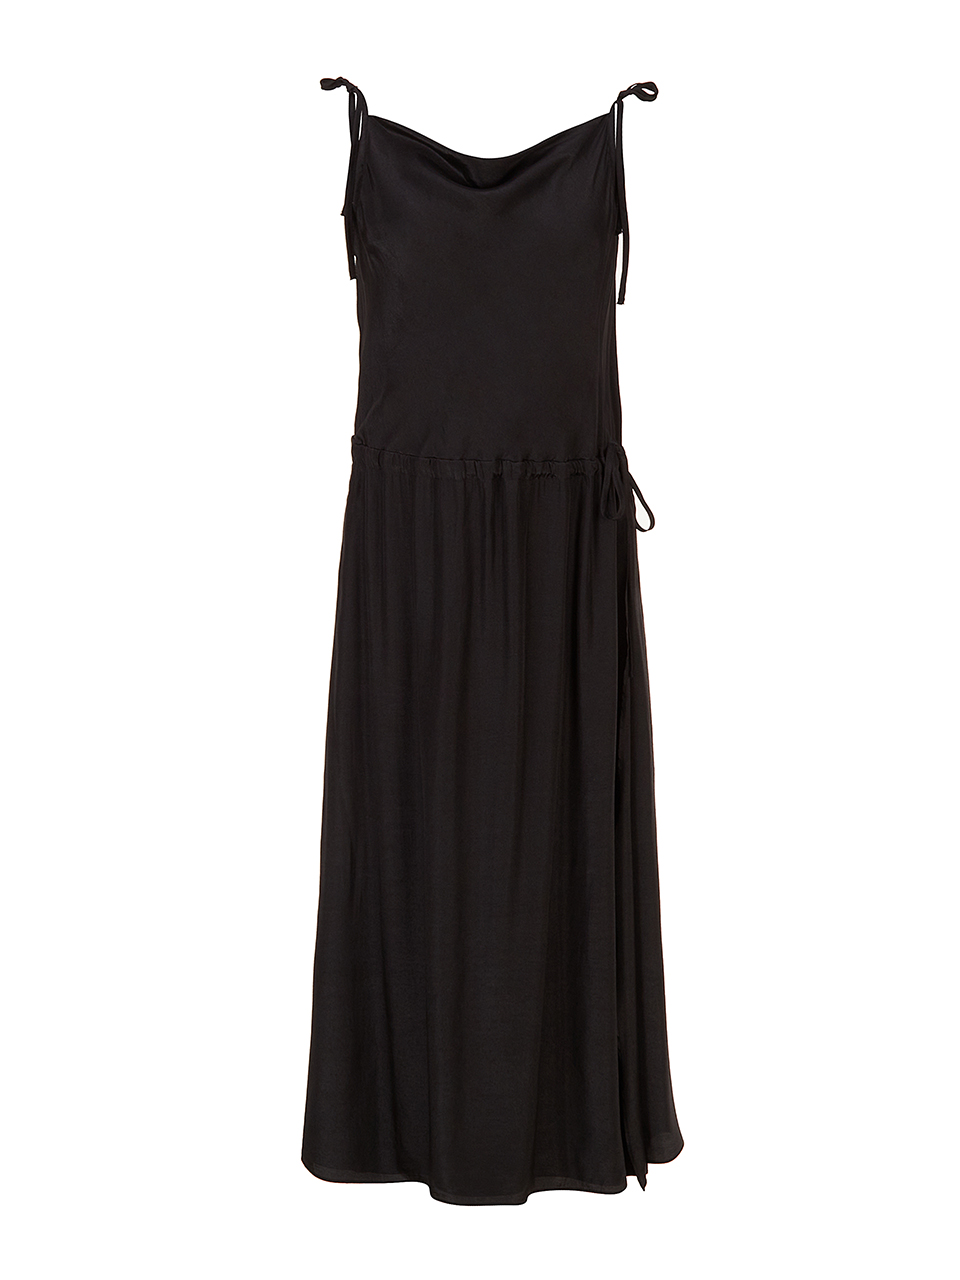 LILY sleeveless silky dress [black]